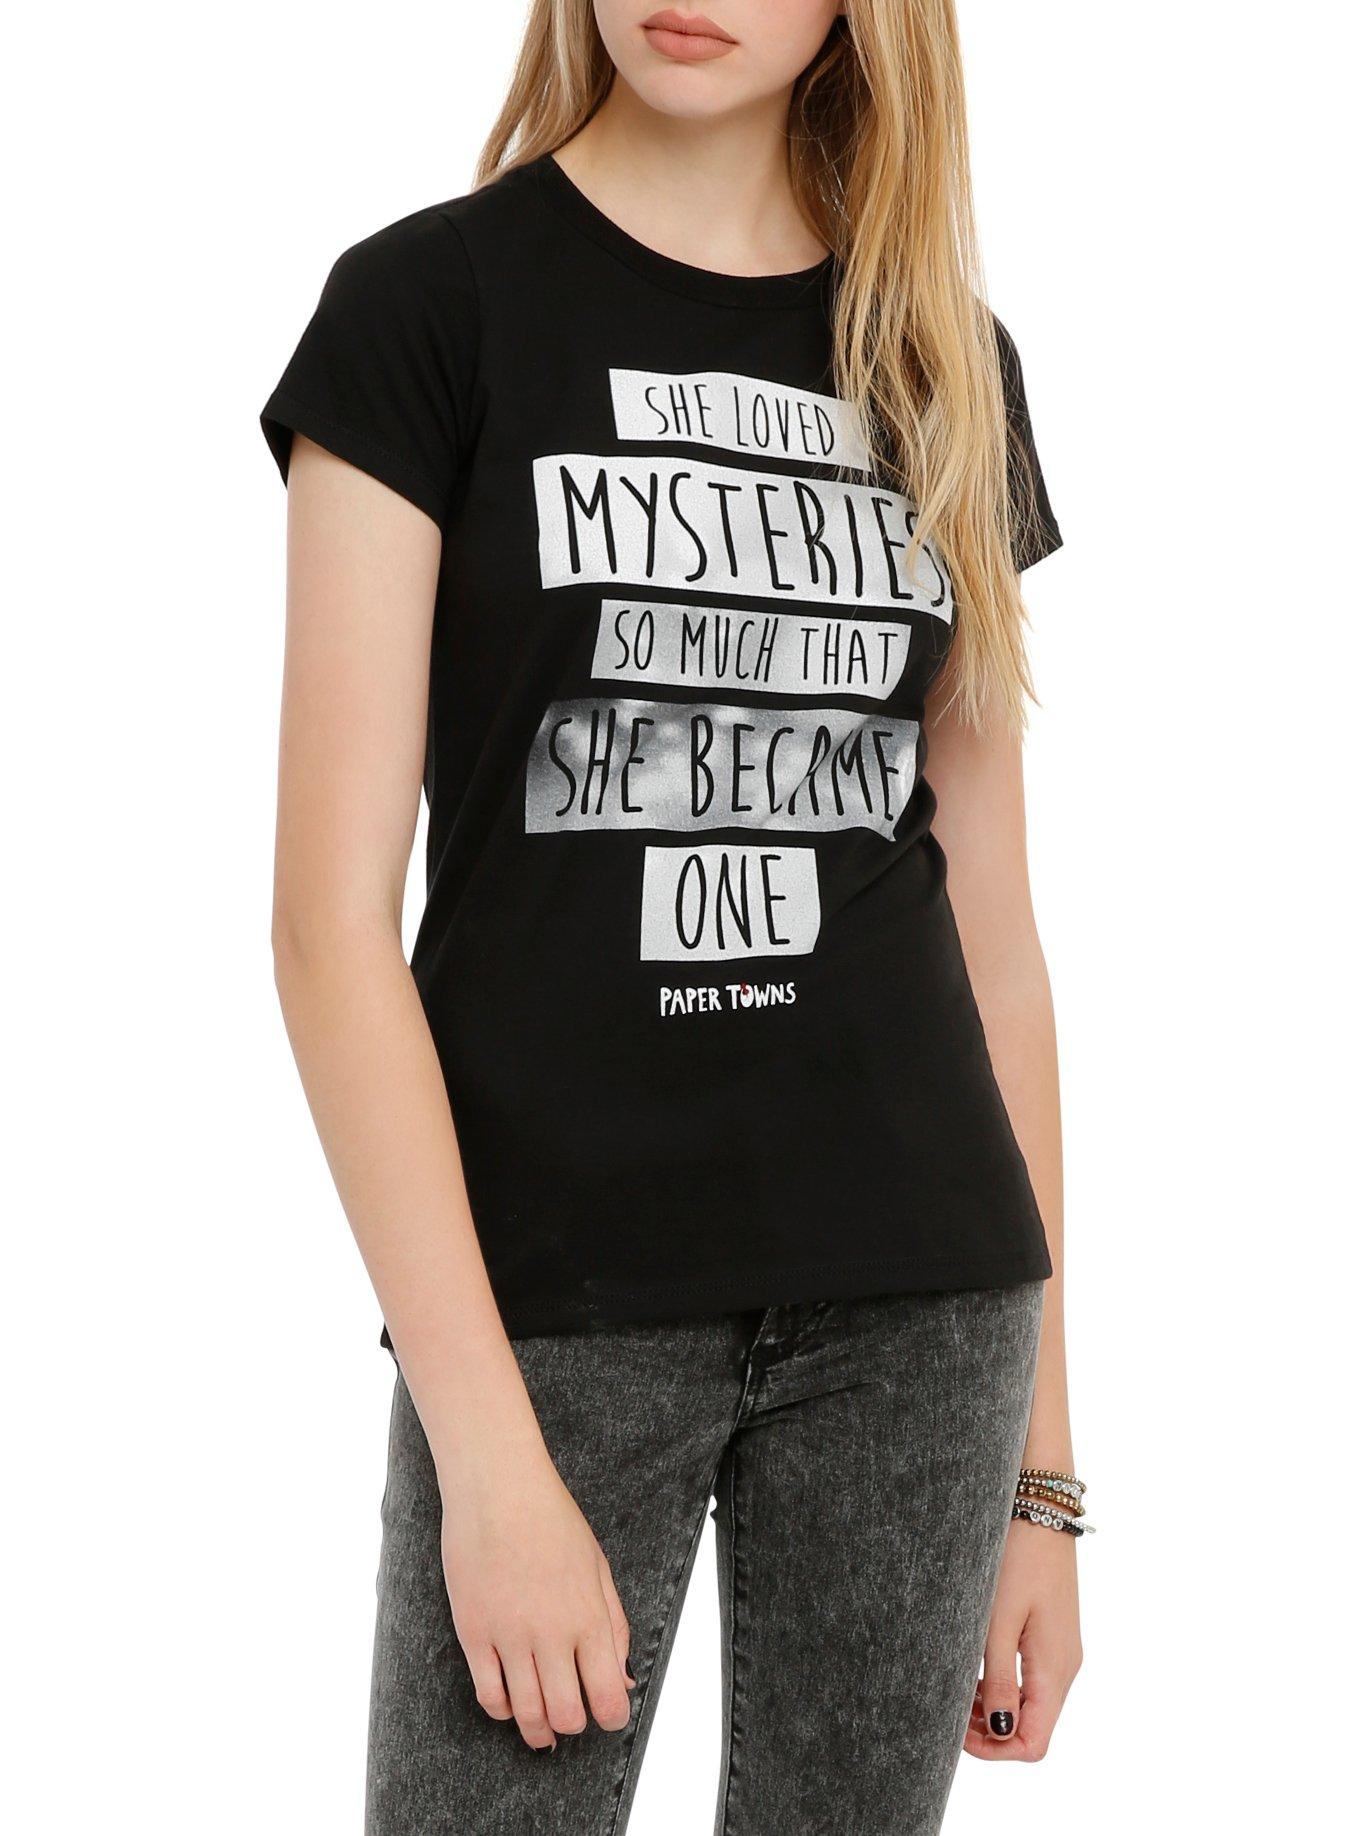 Paper Towns Mysteries Girls T-Shirt, BLACK, hi-res